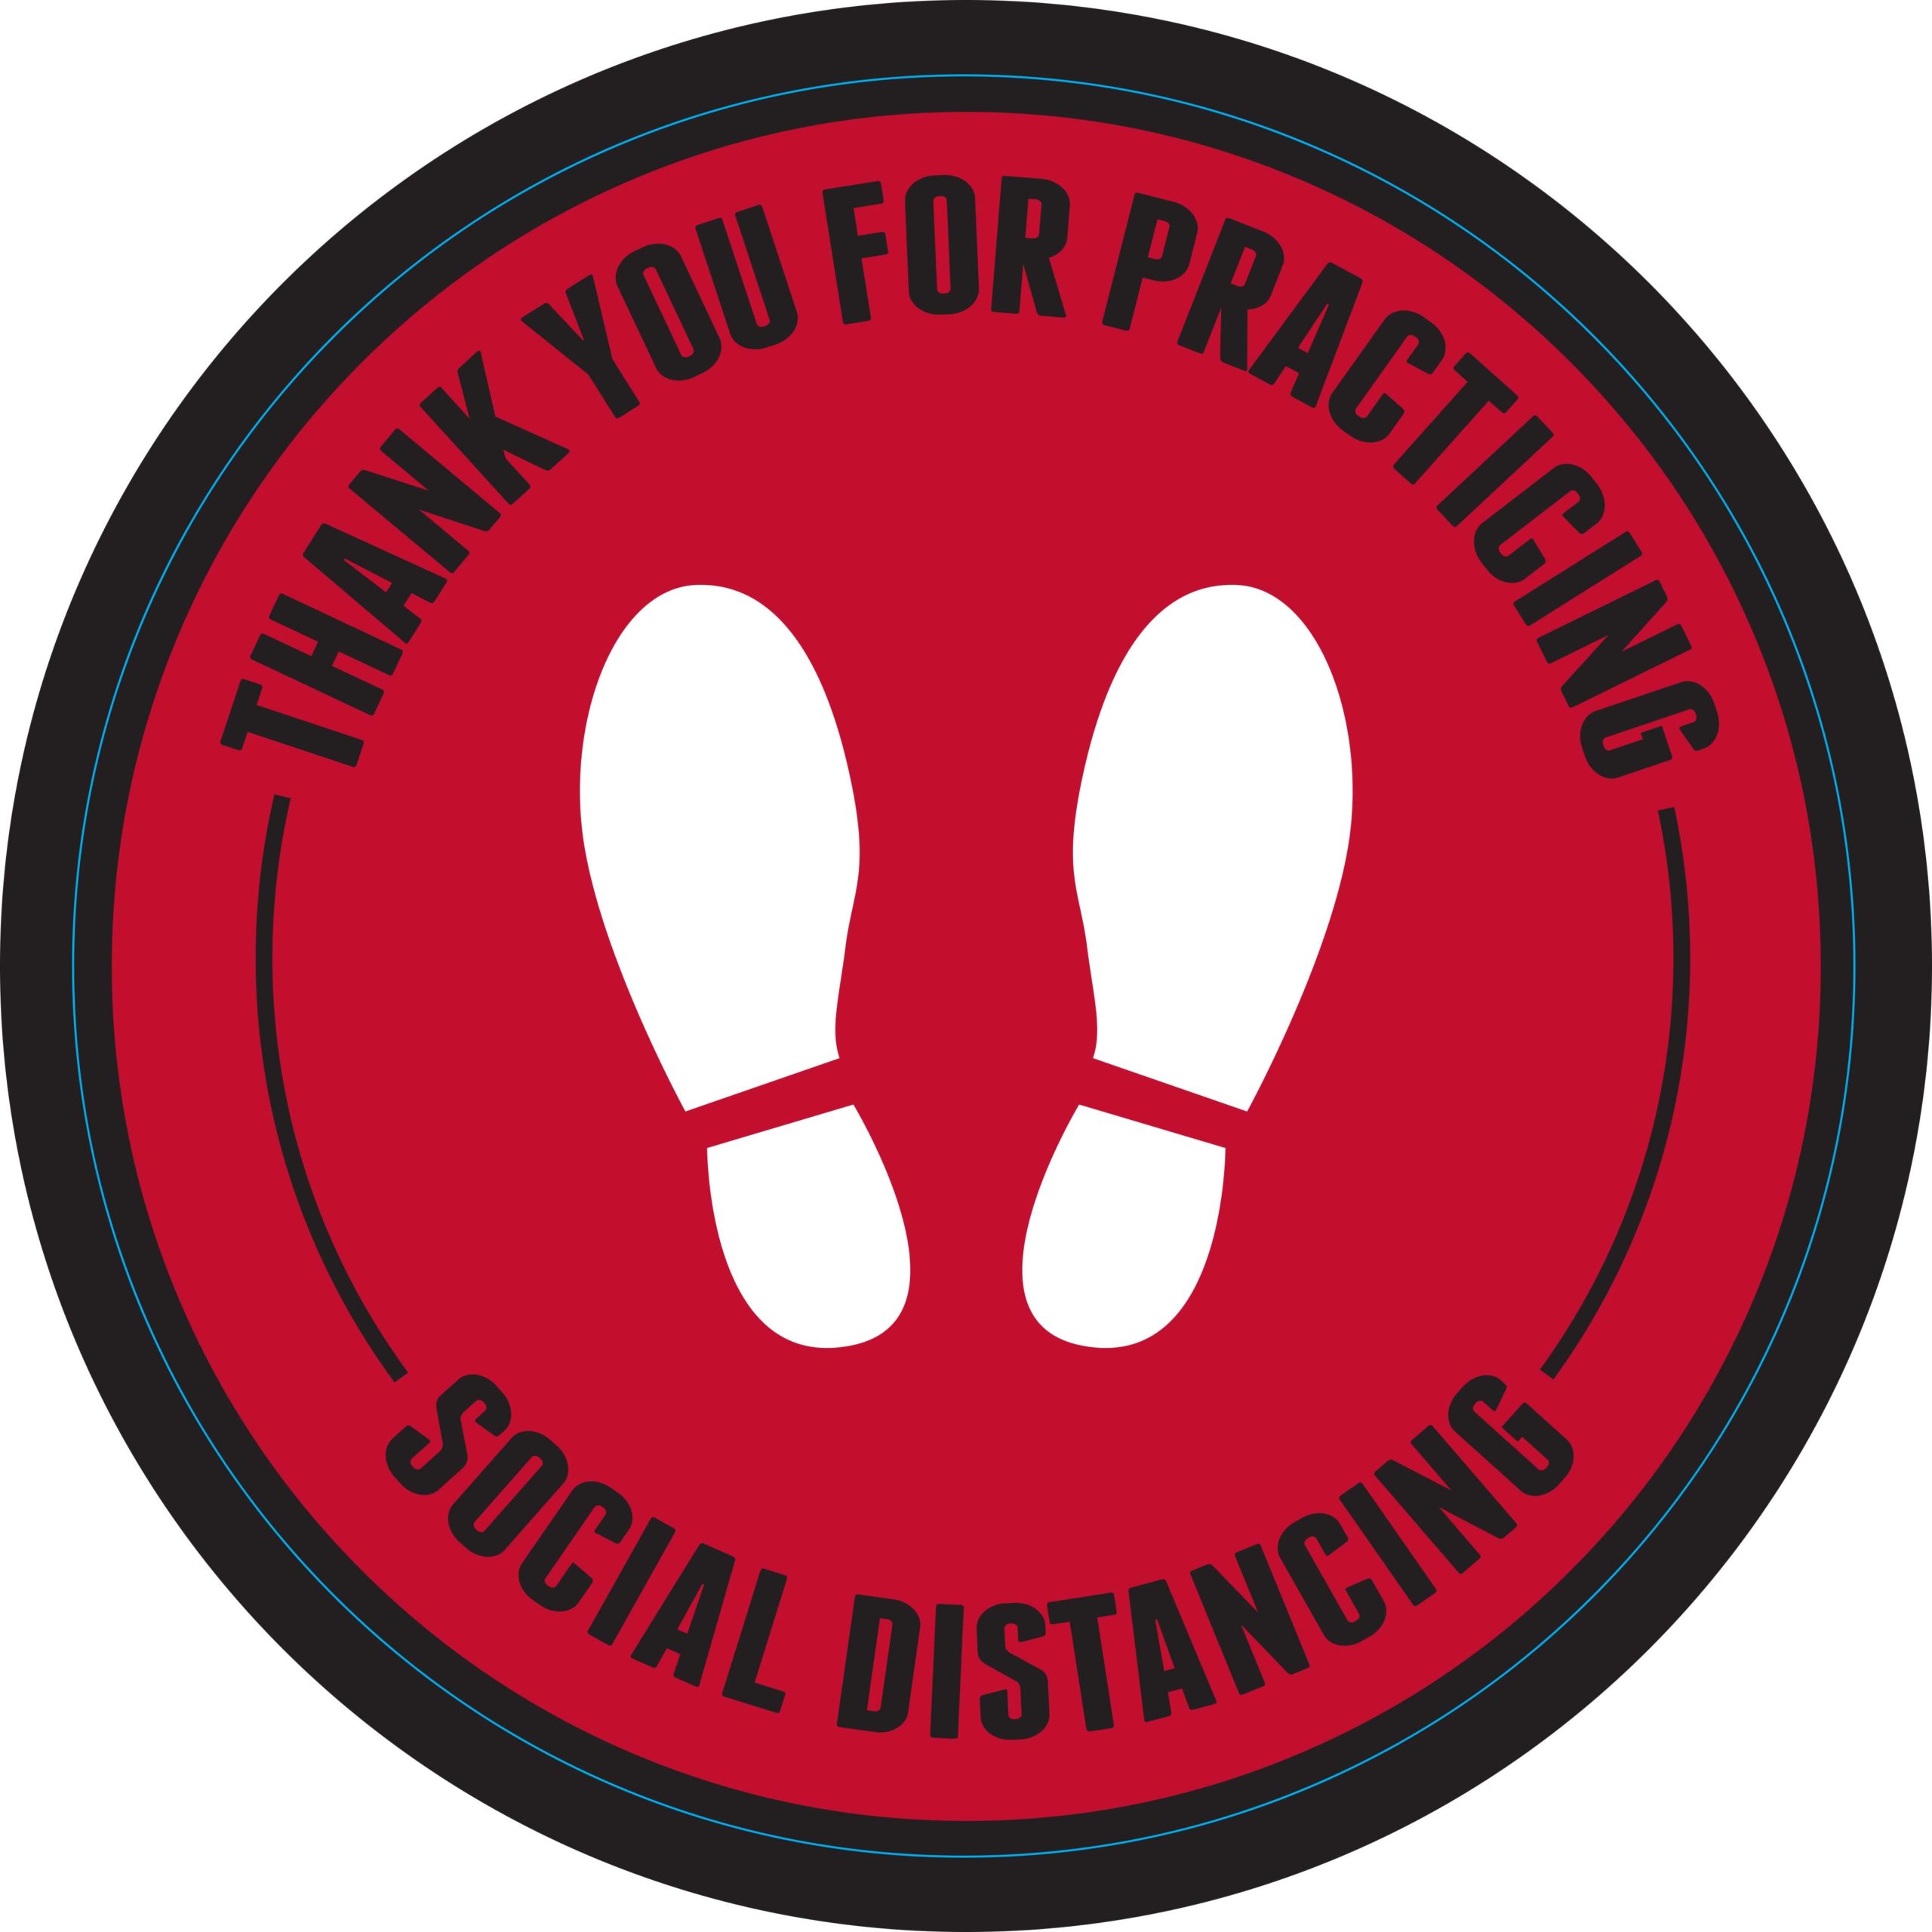 SD - Social Distancing Floor 18" Diameter - RED - 4 pack